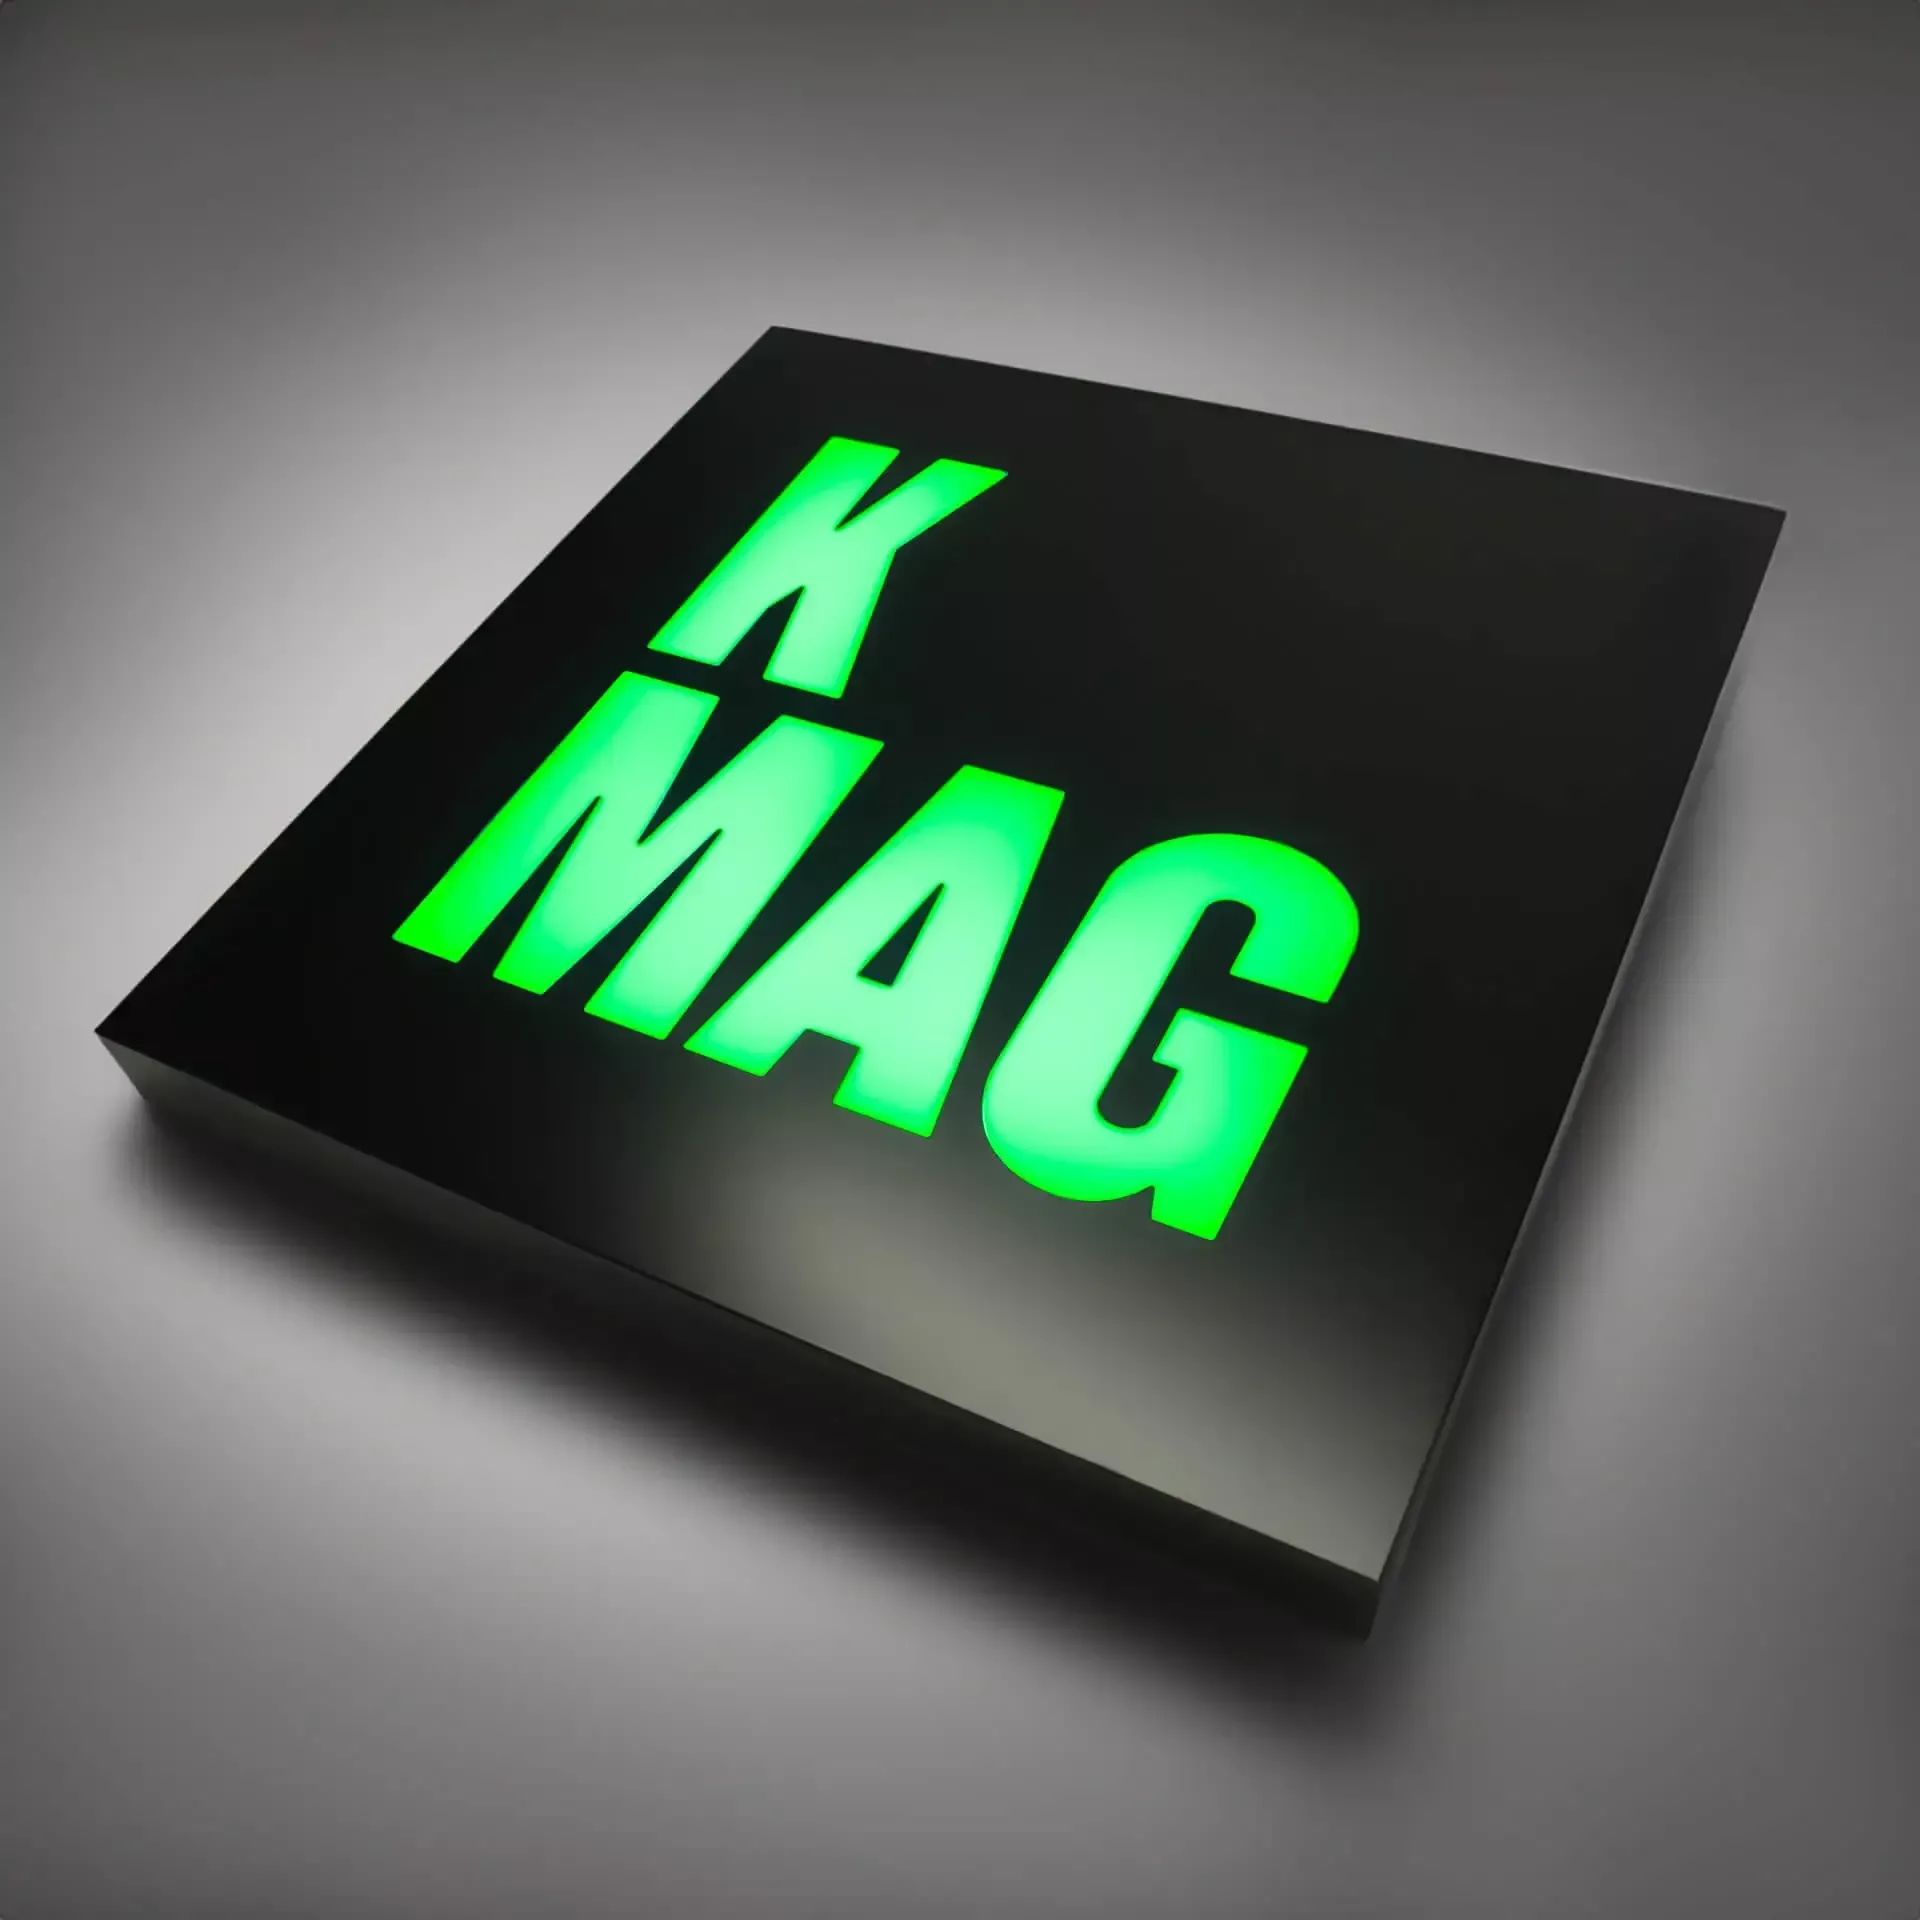 K MAG - Illuminated LED light box